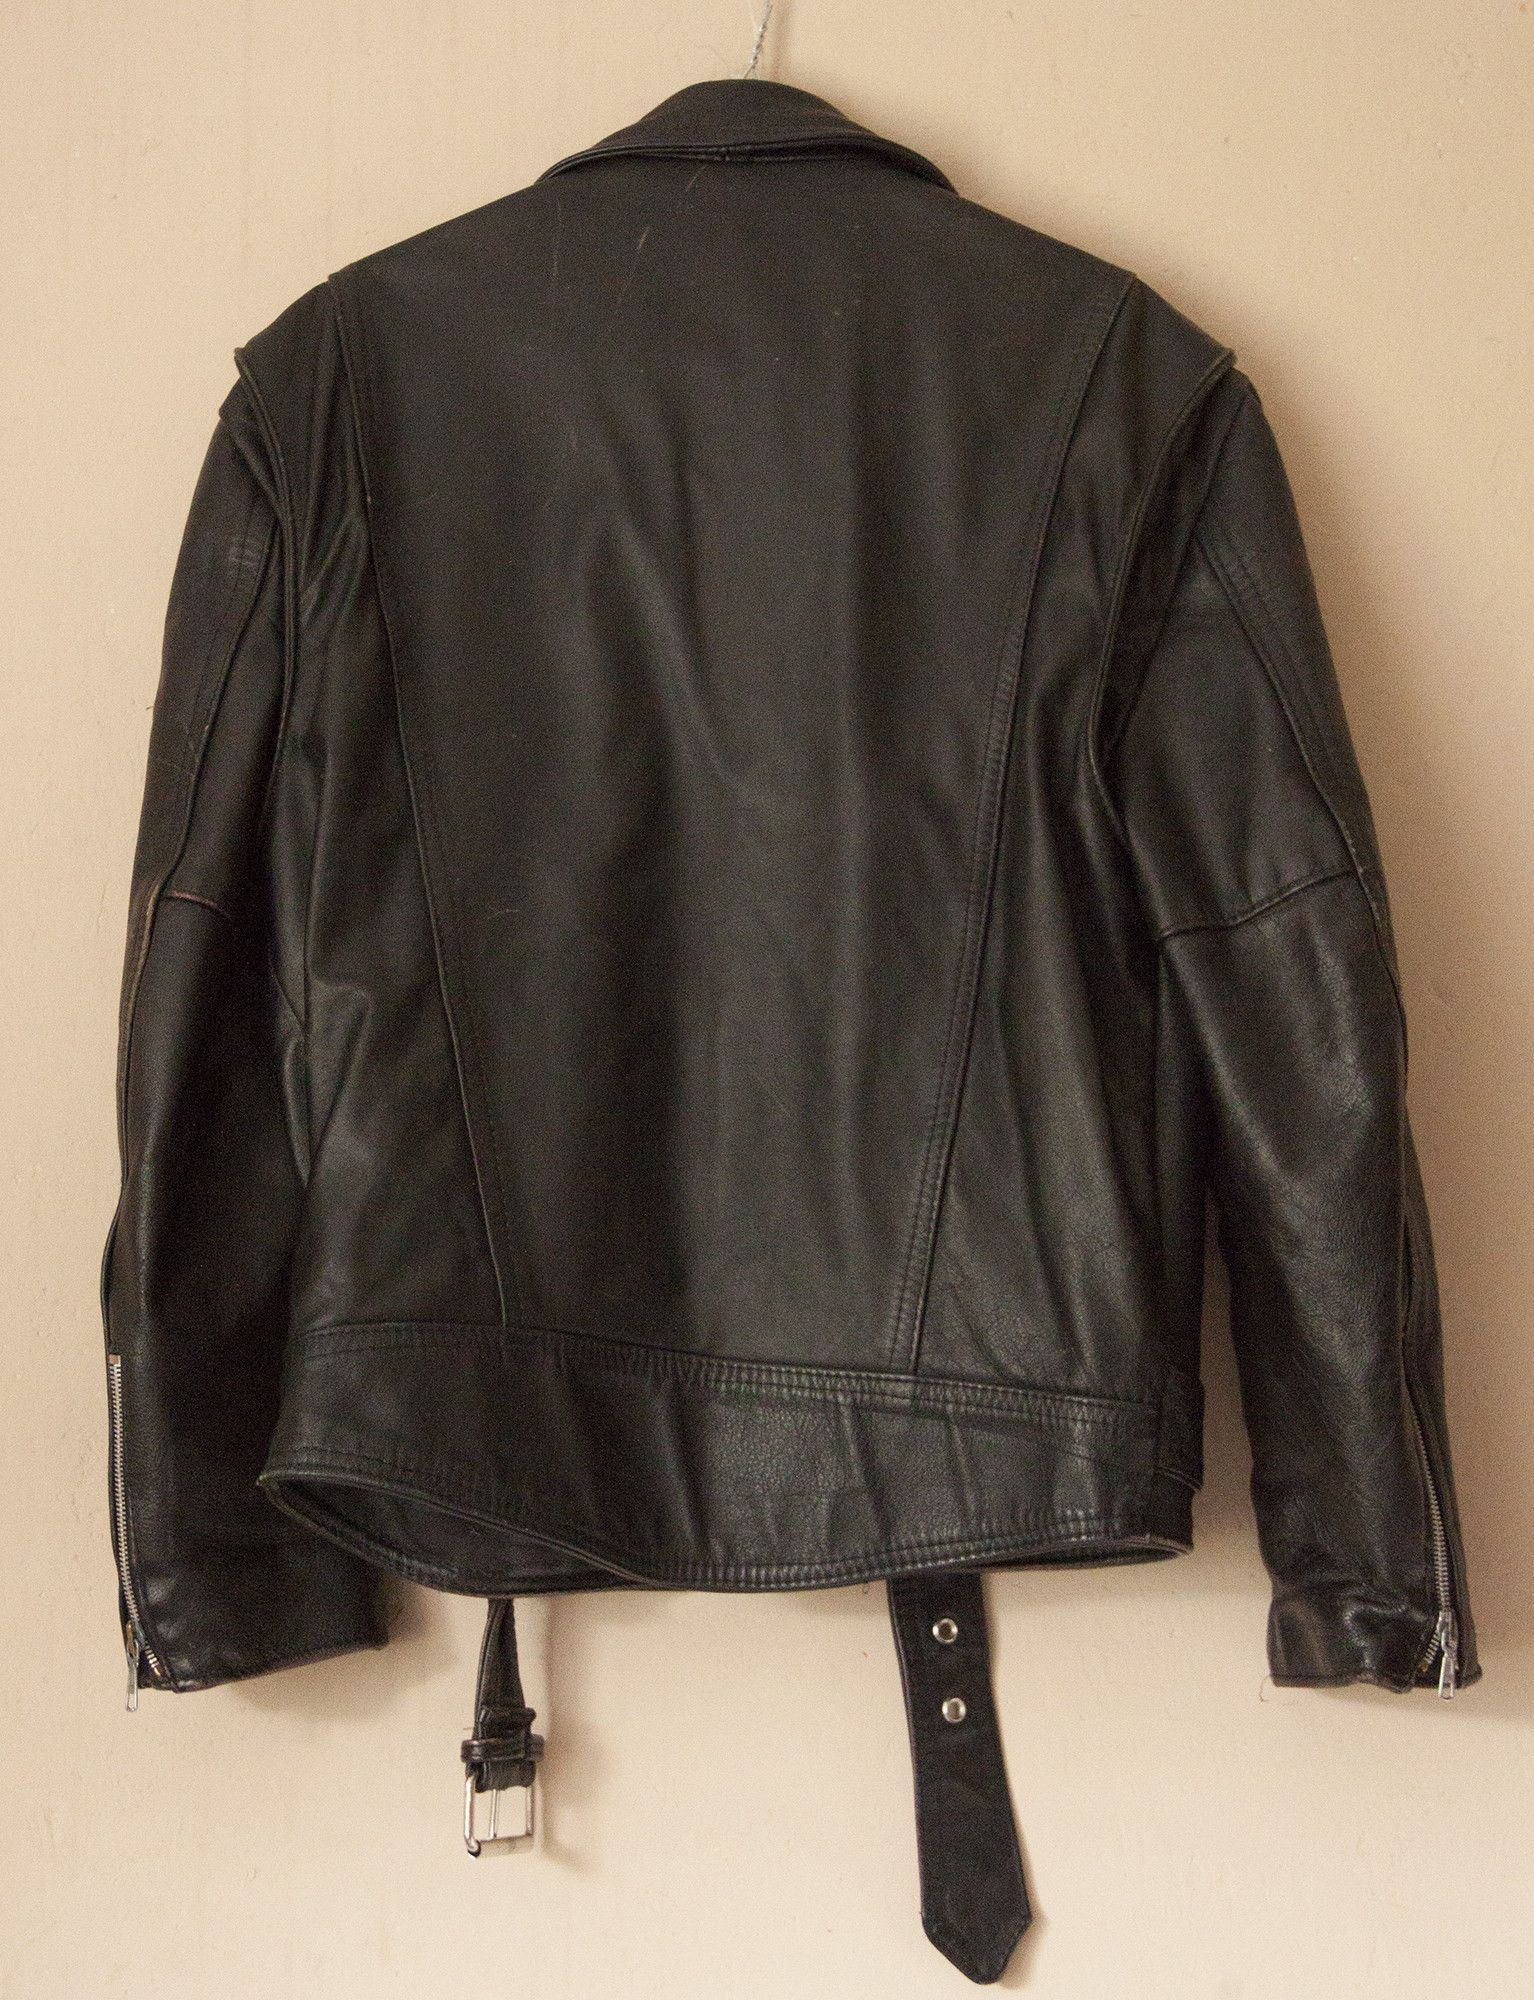 Vintage Vintage leather ramones jacket Size US S / EU 44-46 / 1 - 2 Preview